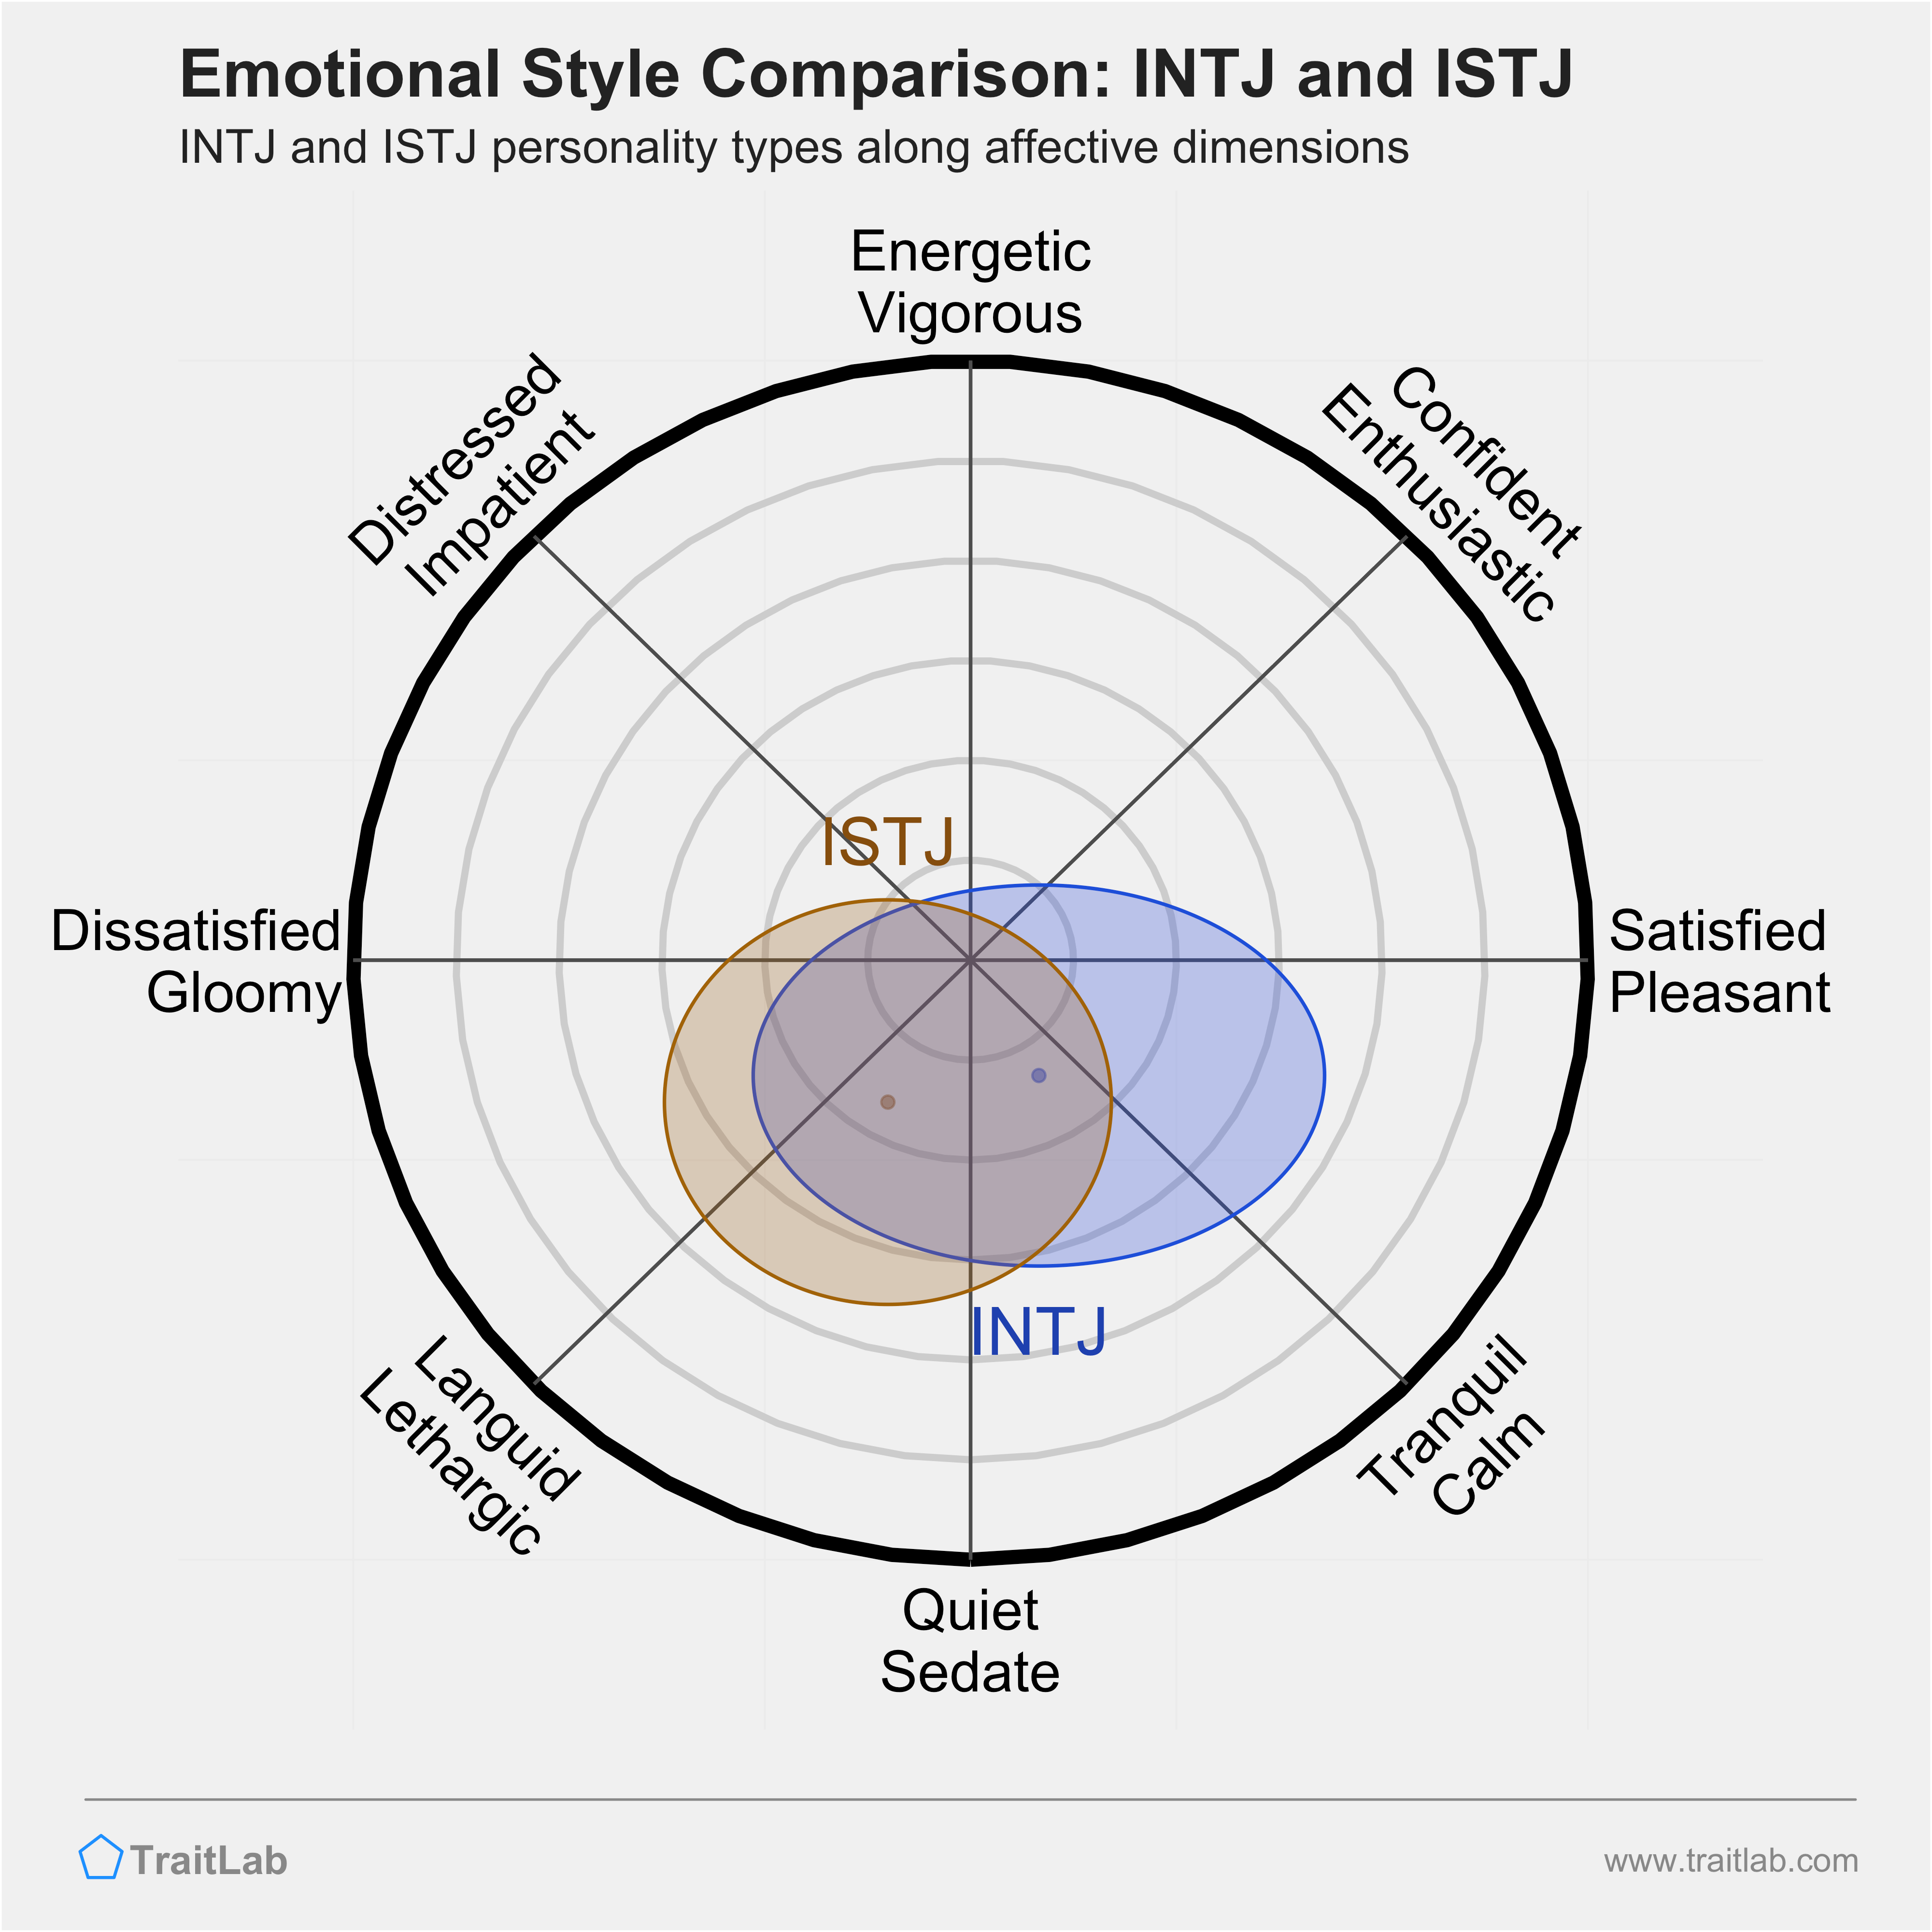 INTJ and ISTJ comparison across emotional (affective) dimensions